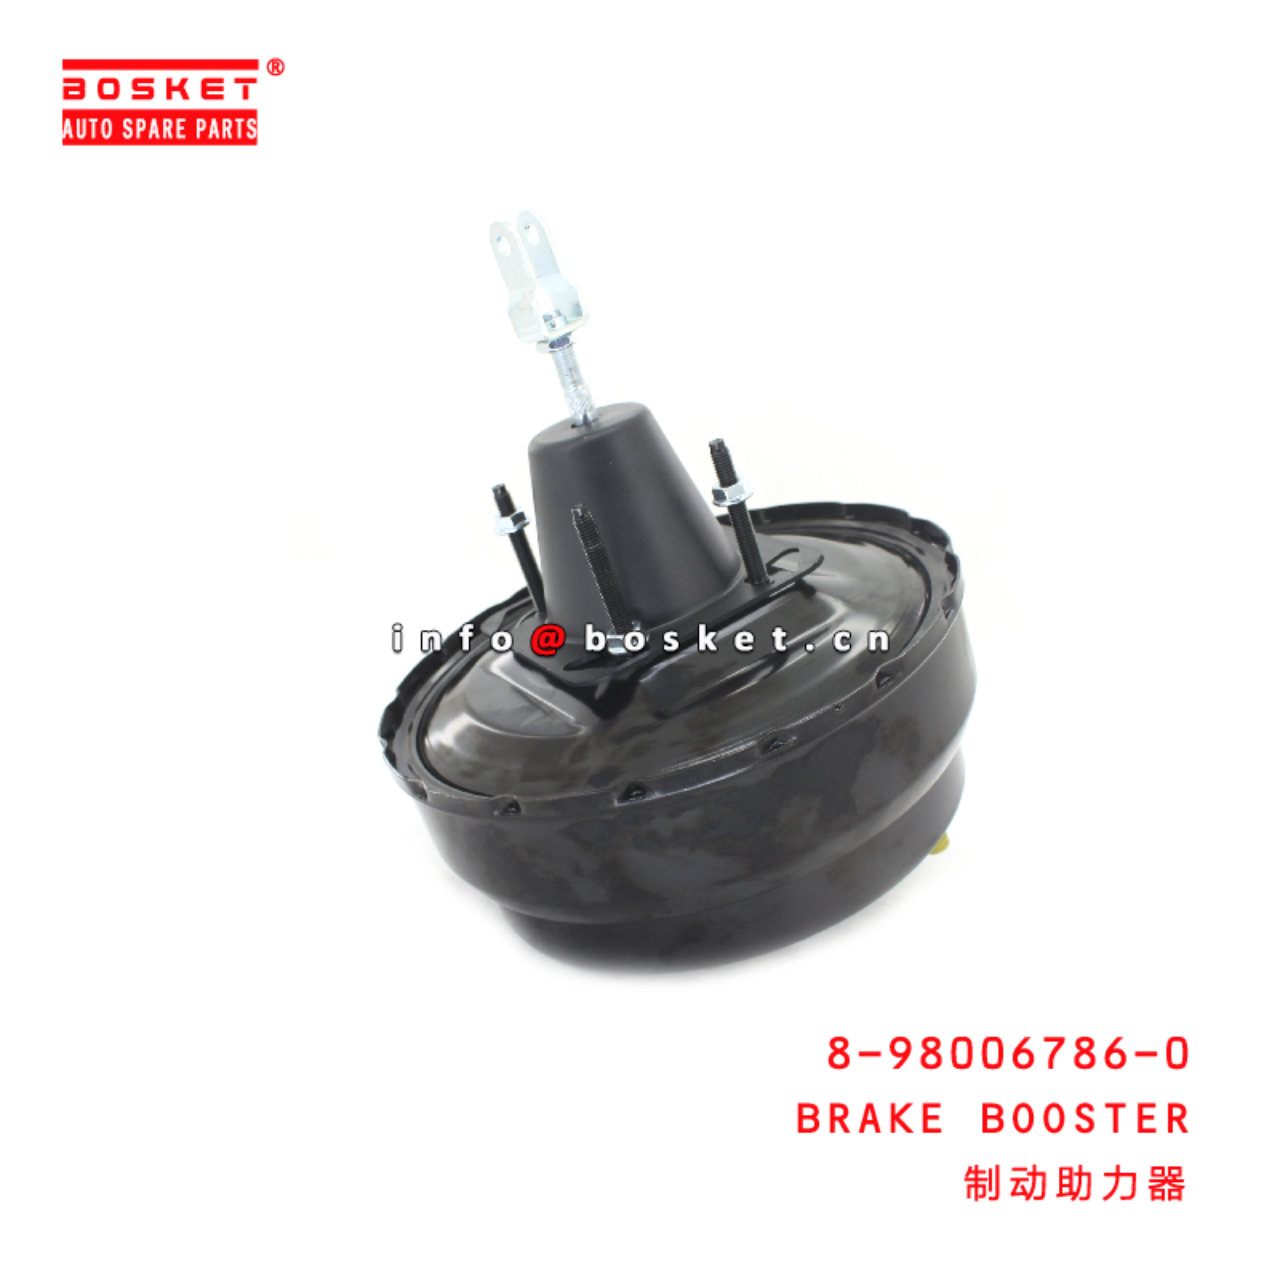 8-98006786-0 Brake Booster suitable for ISUZU KB 96-02  8980067860